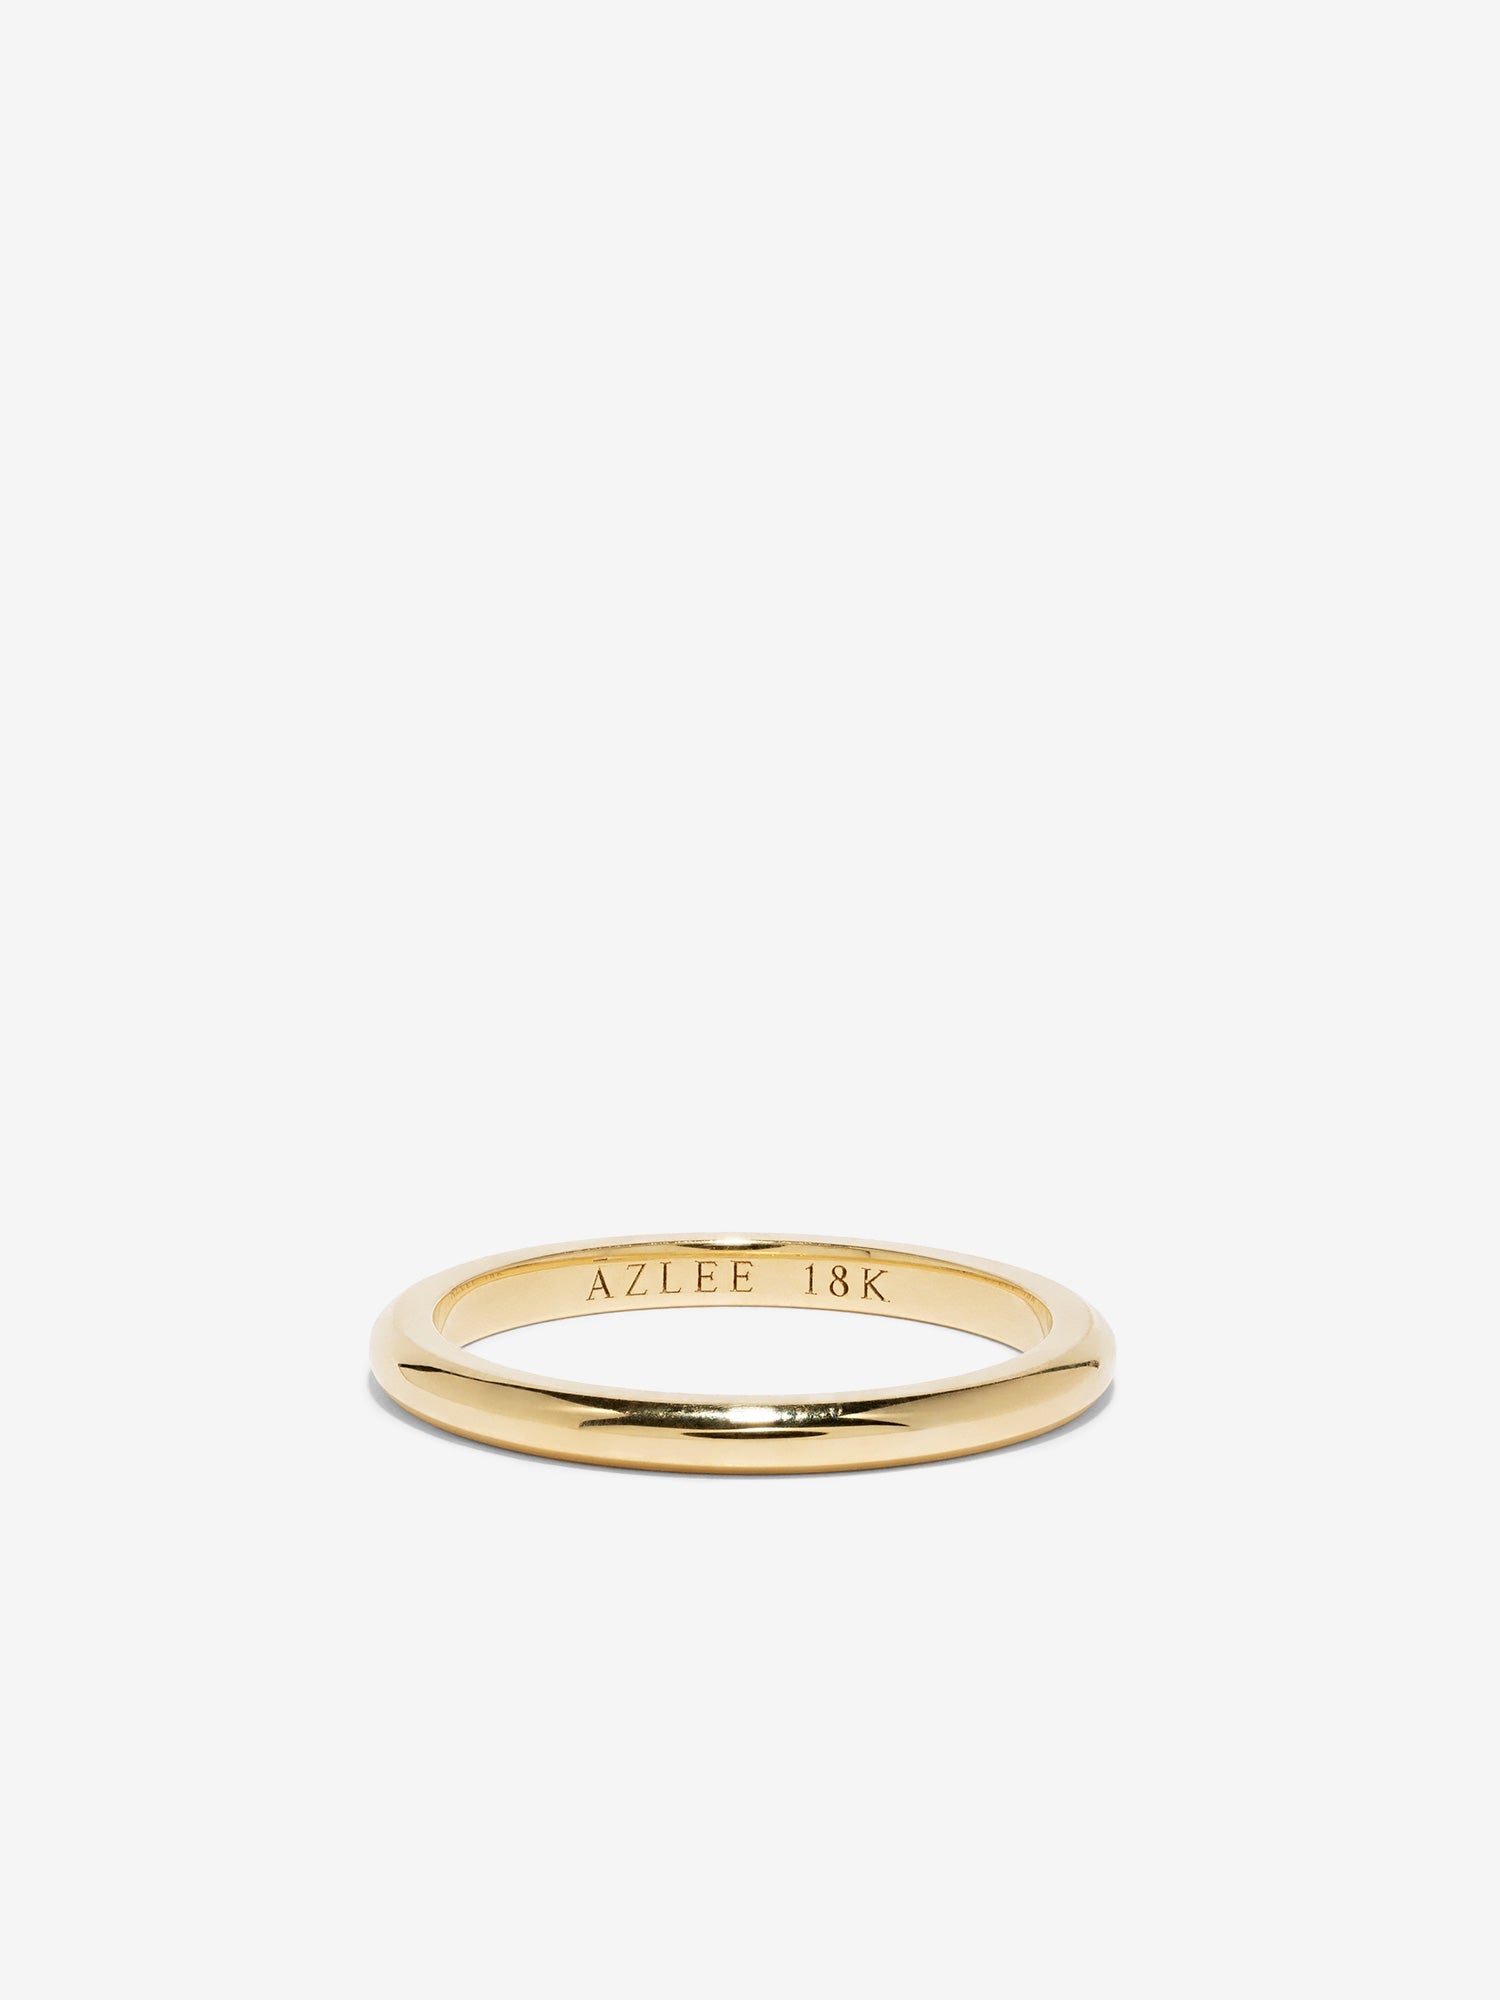 1.8 D シェイプの結婚指輪